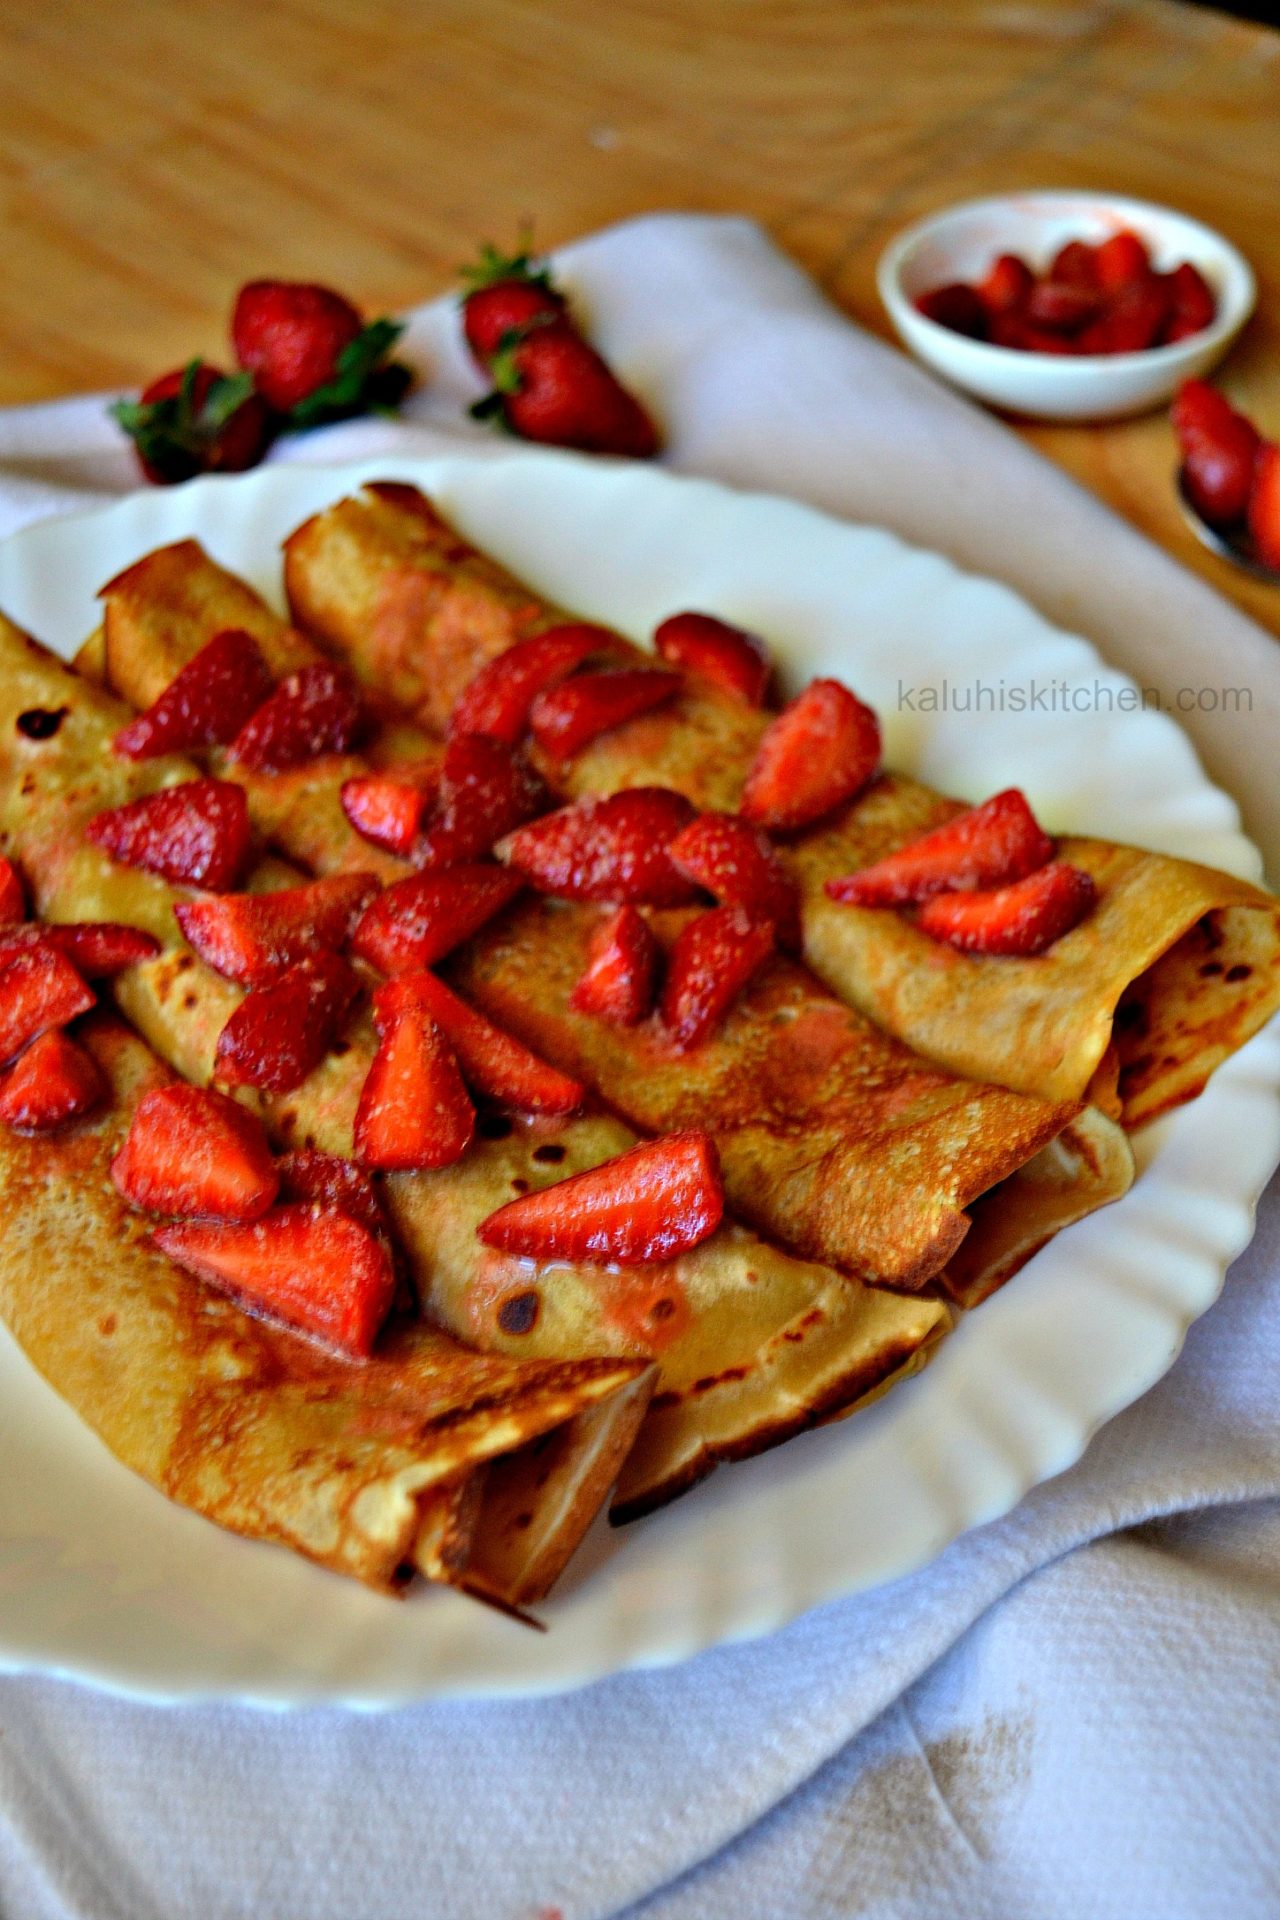 kenyan food bloggers_best food blog in kenya_best food blogs in africa_amarula crepes with macerated strawberries_kaluhiskitchen.com